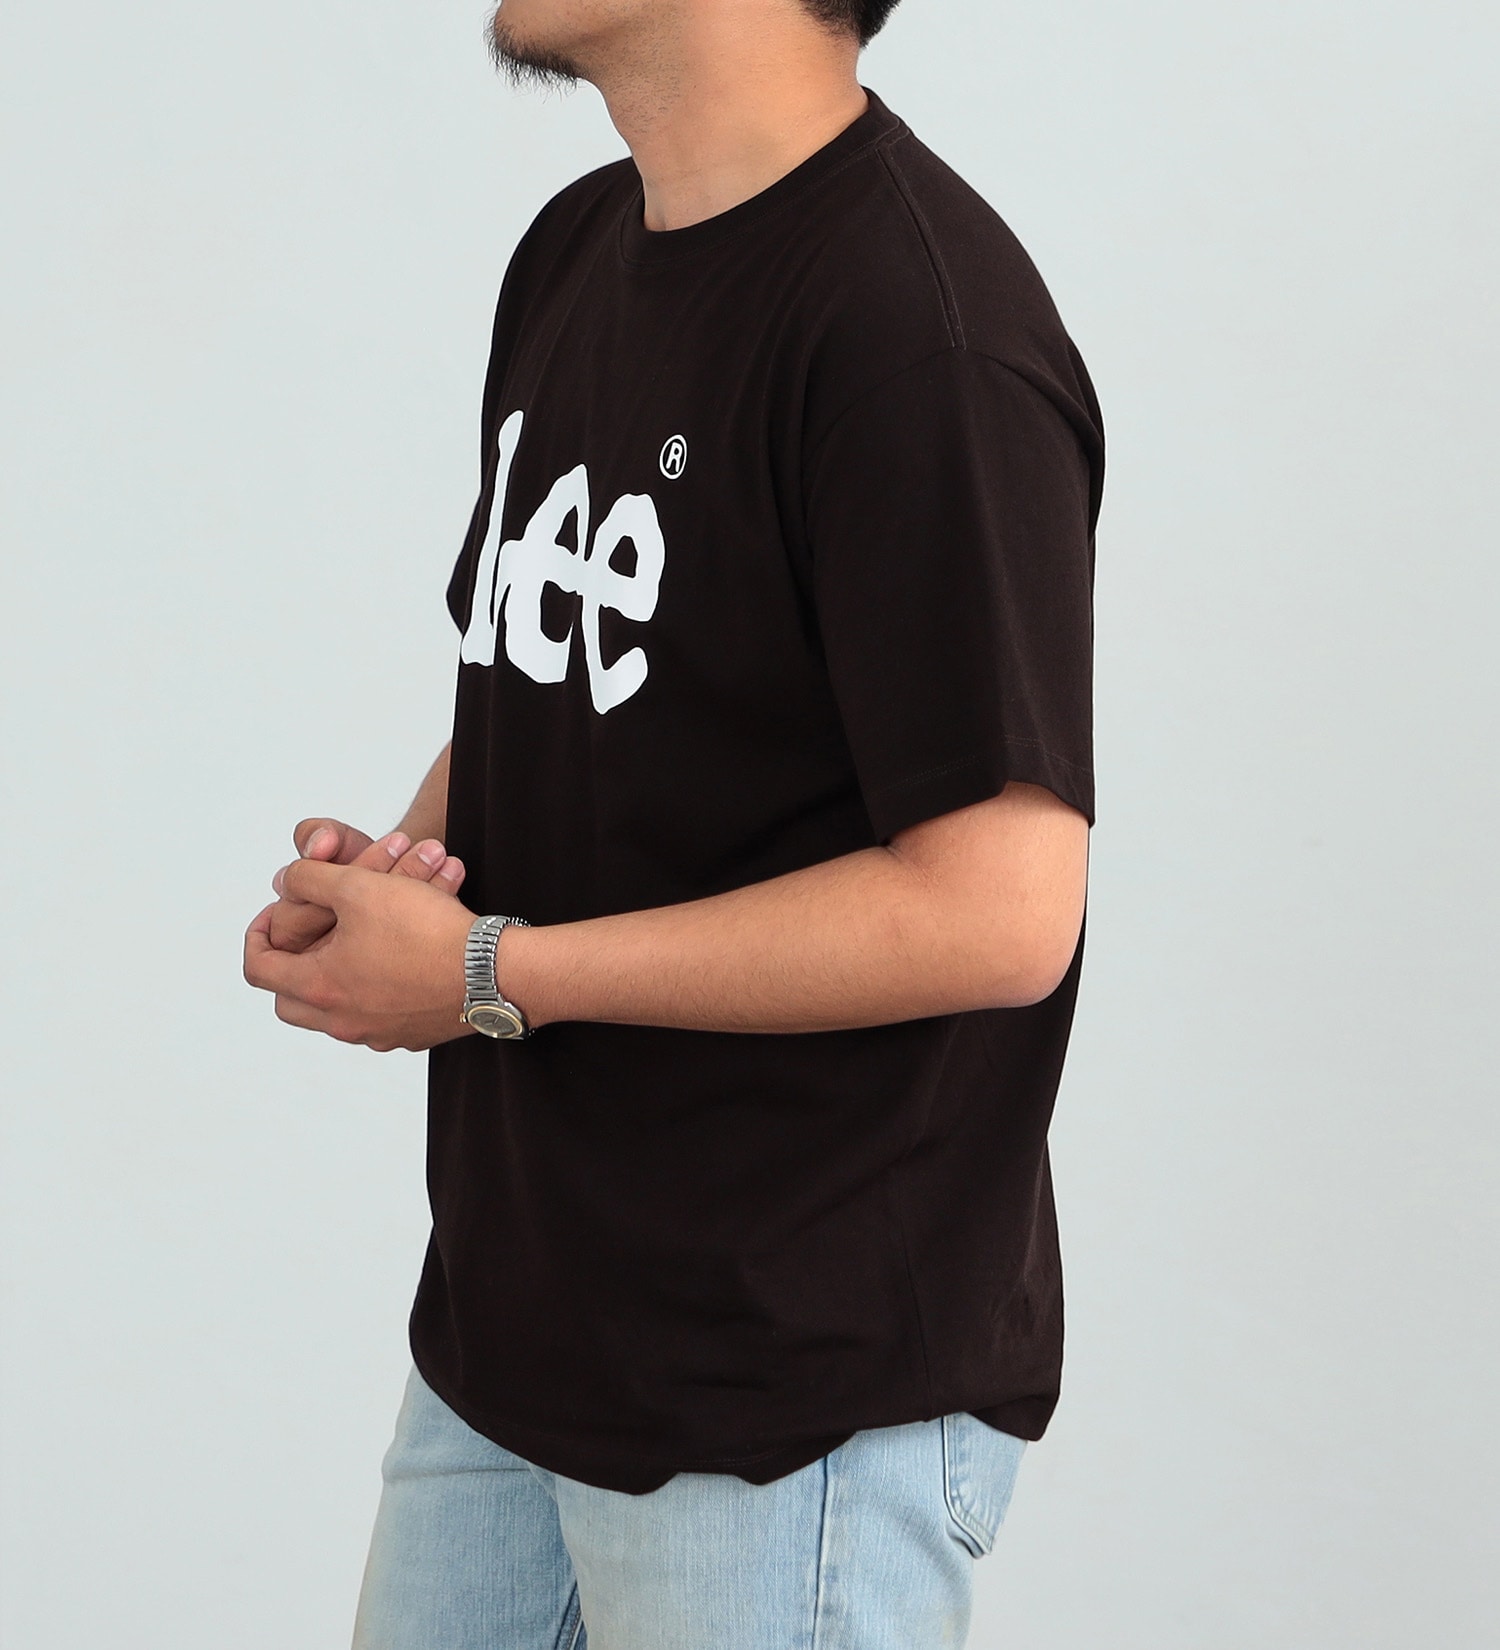 Lee(リー)の【FINAL SALE】Lee ロゴ ショートスリーブTee|トップス/Tシャツ/カットソー/メンズ|ブラック